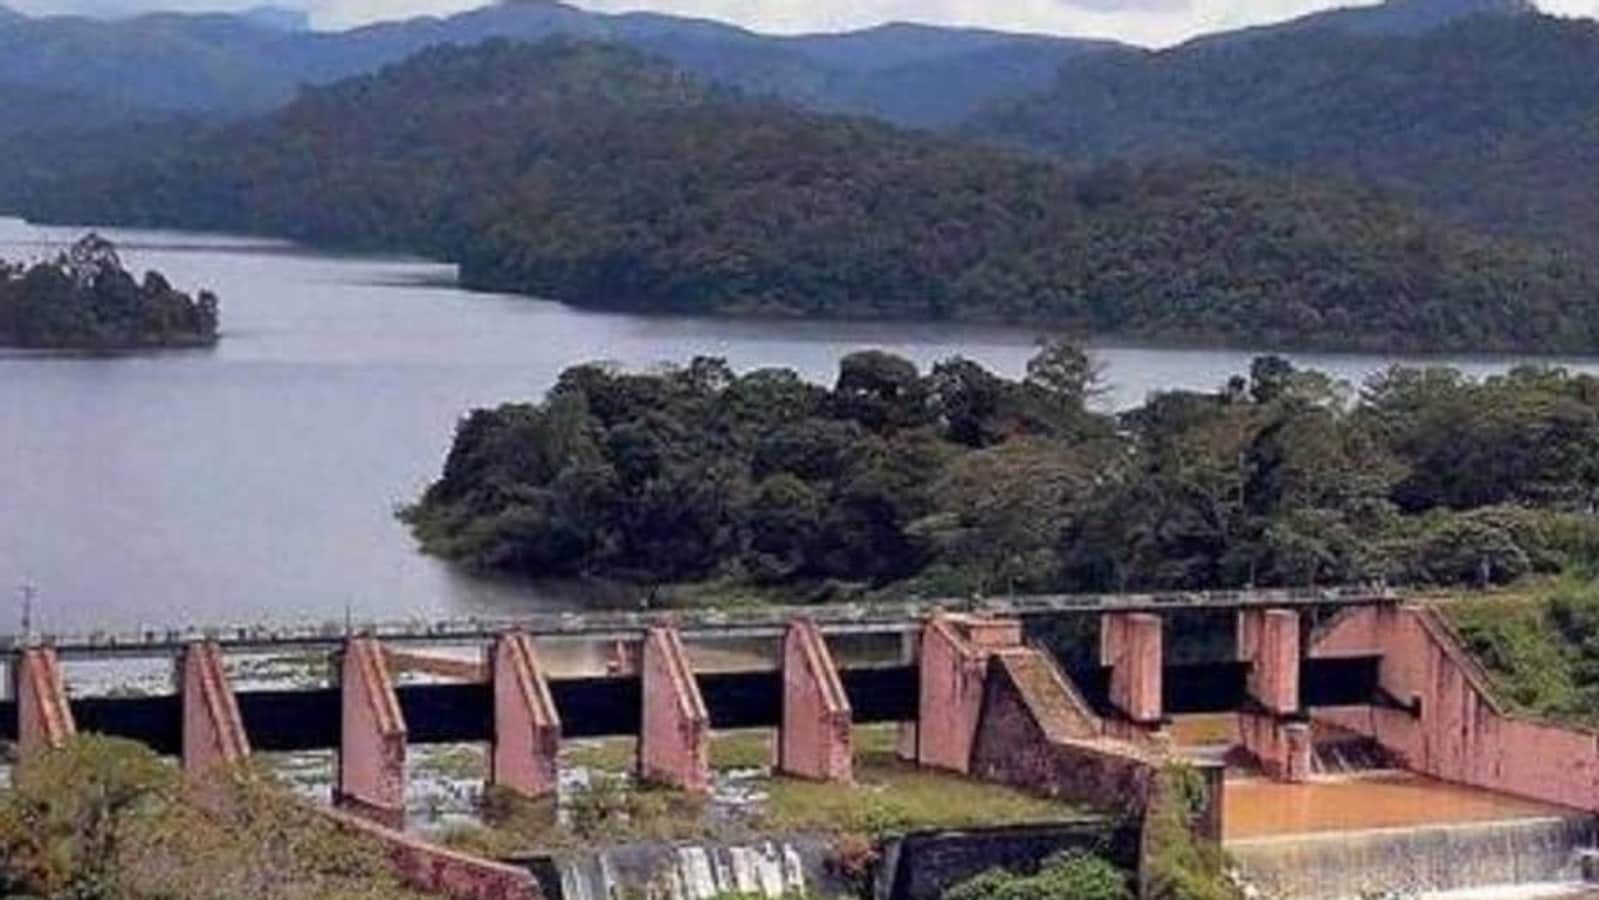 mullaperiyar dam shutter opens again